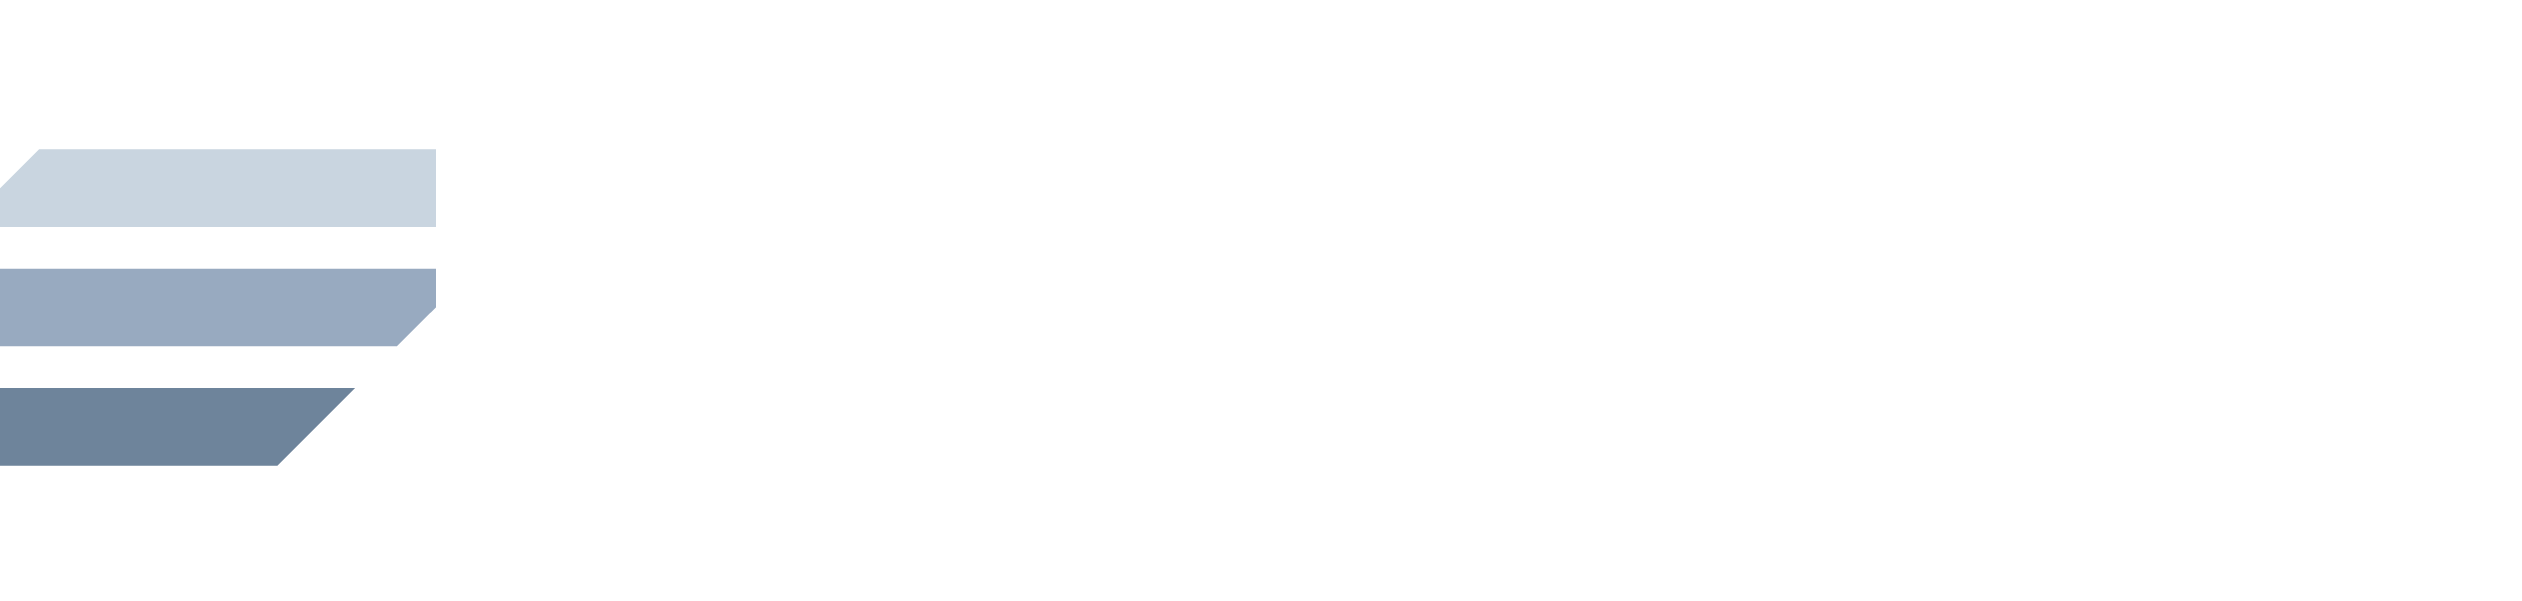 Agiloft_Signature_Rev_Color_RGB